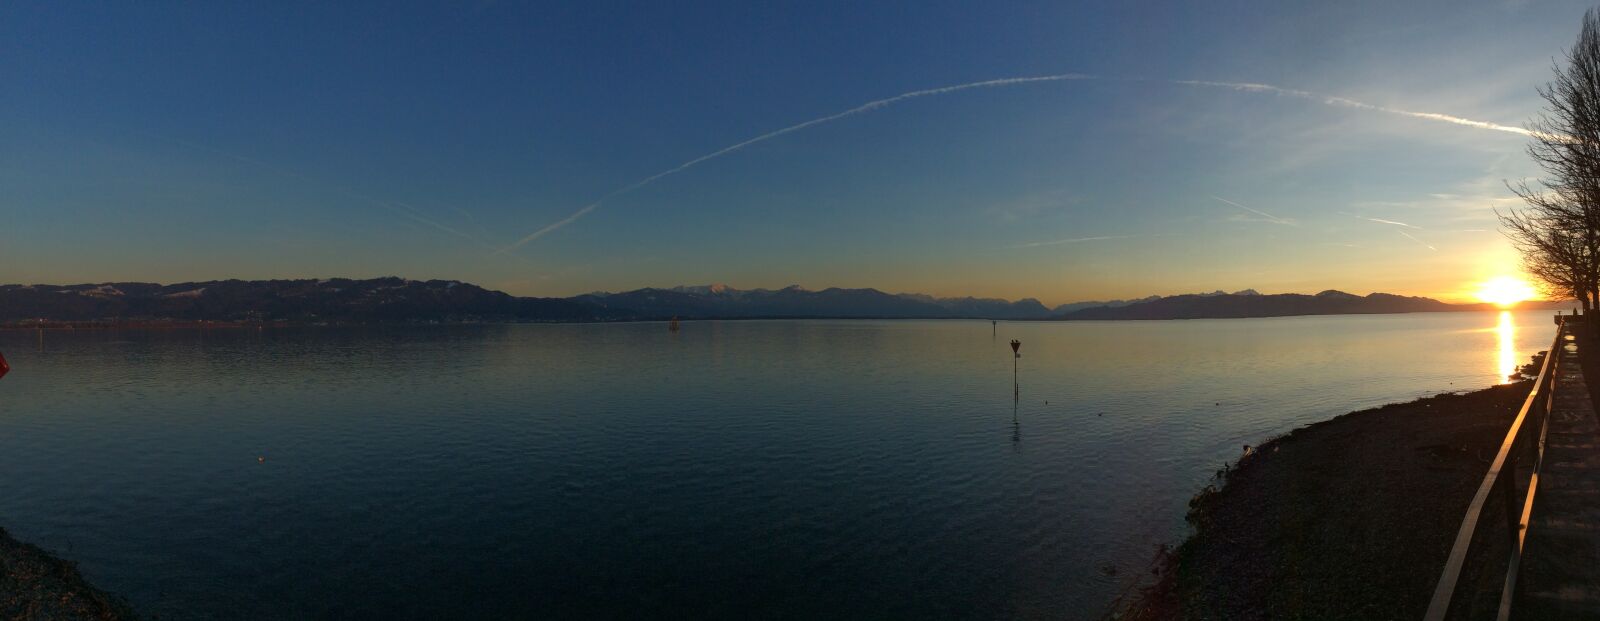 Apple iPad Air + iPad Air back camera 3.3mm f/2.4 sample photo. Lake, landscape, airplane, sunset photography